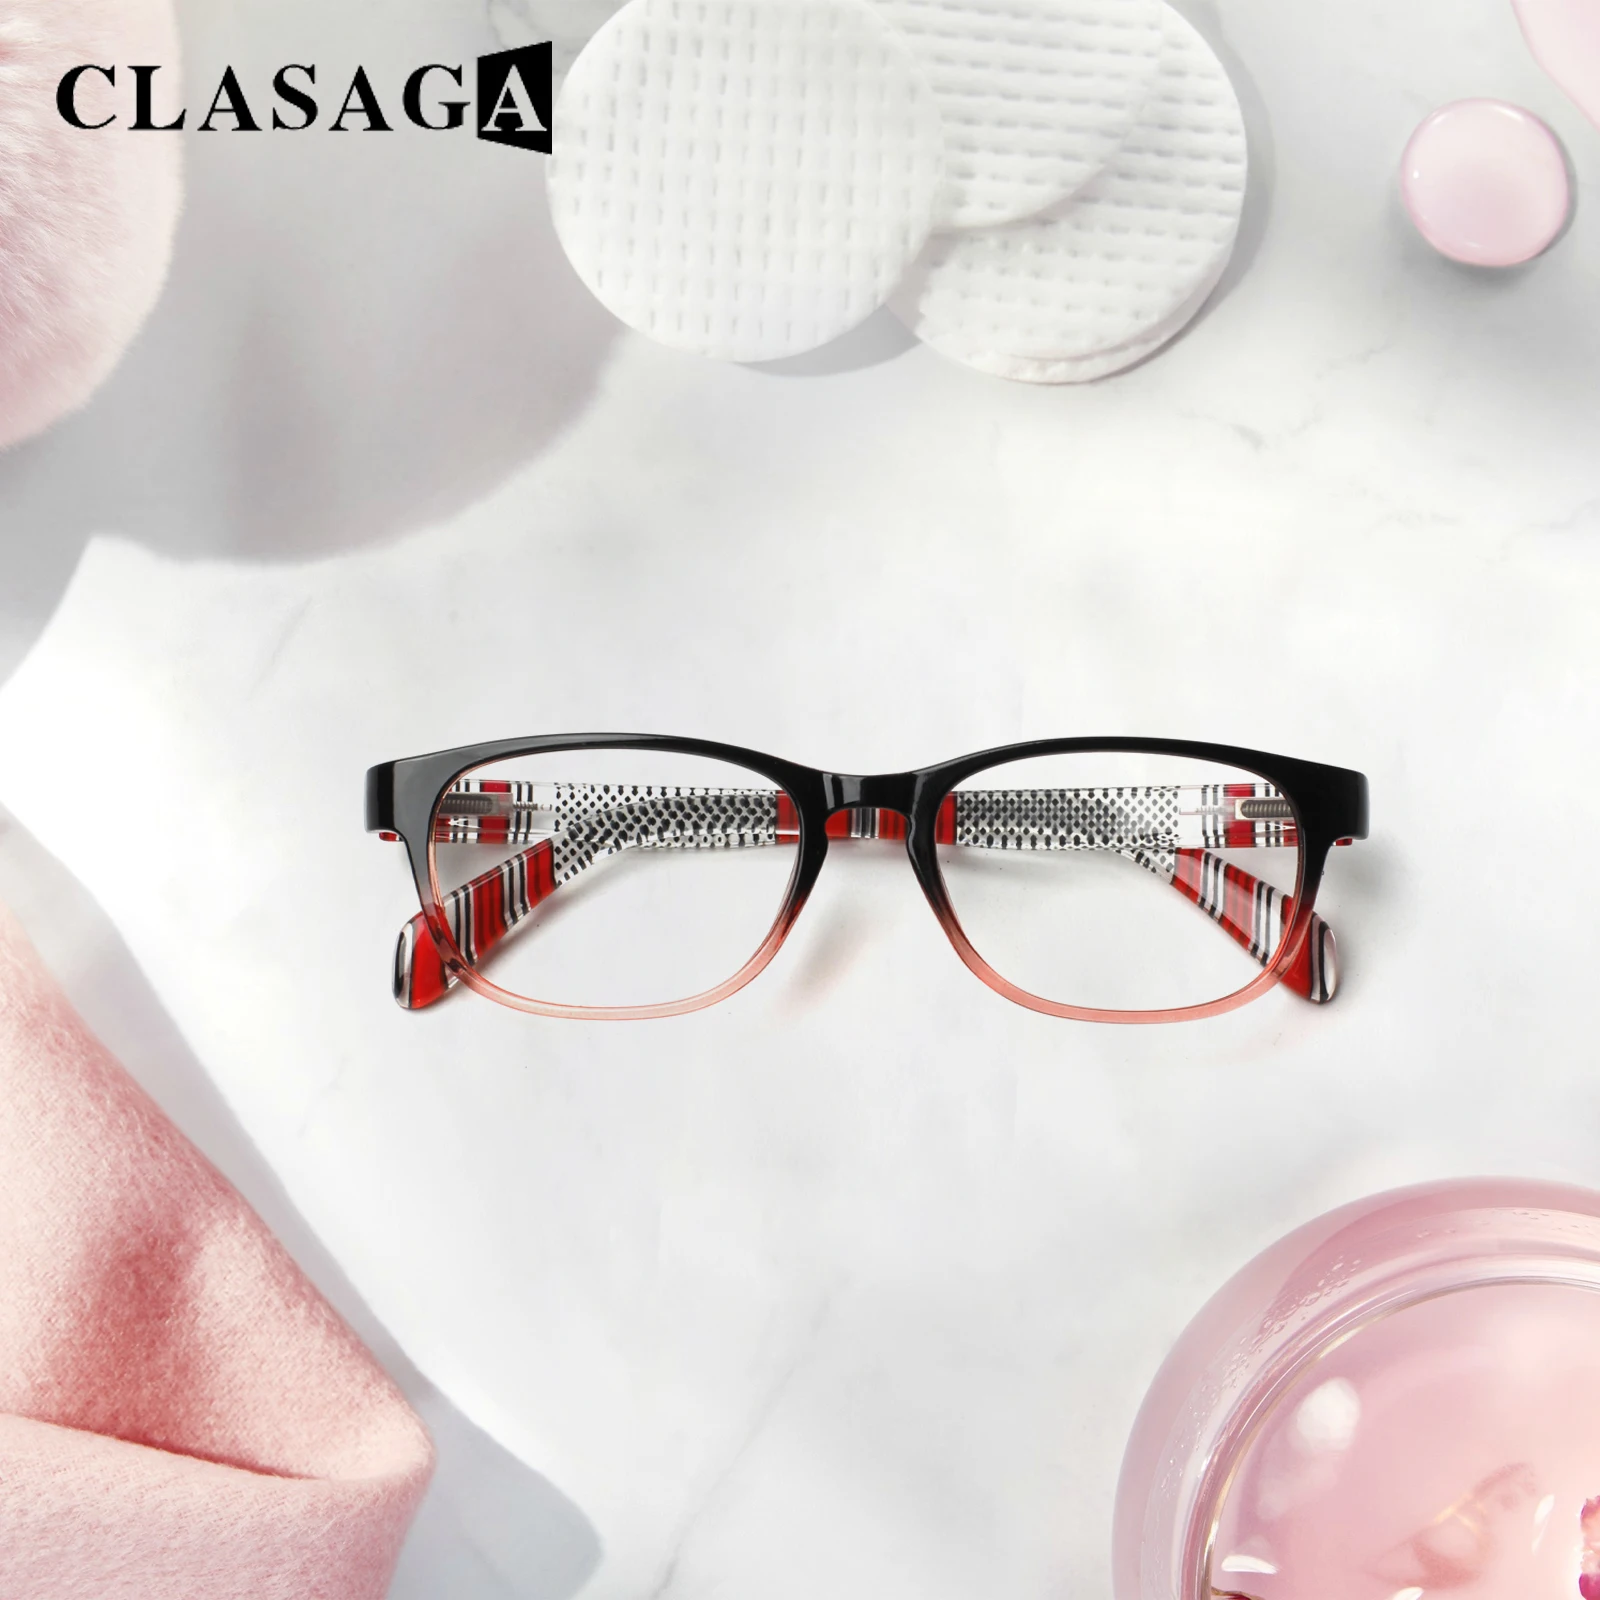 

CLASAGA Rectangular Reading Glasses for Men And Women Anti-Reflective HD Lenses Comfortable And Lightweight Prescription Eyewear